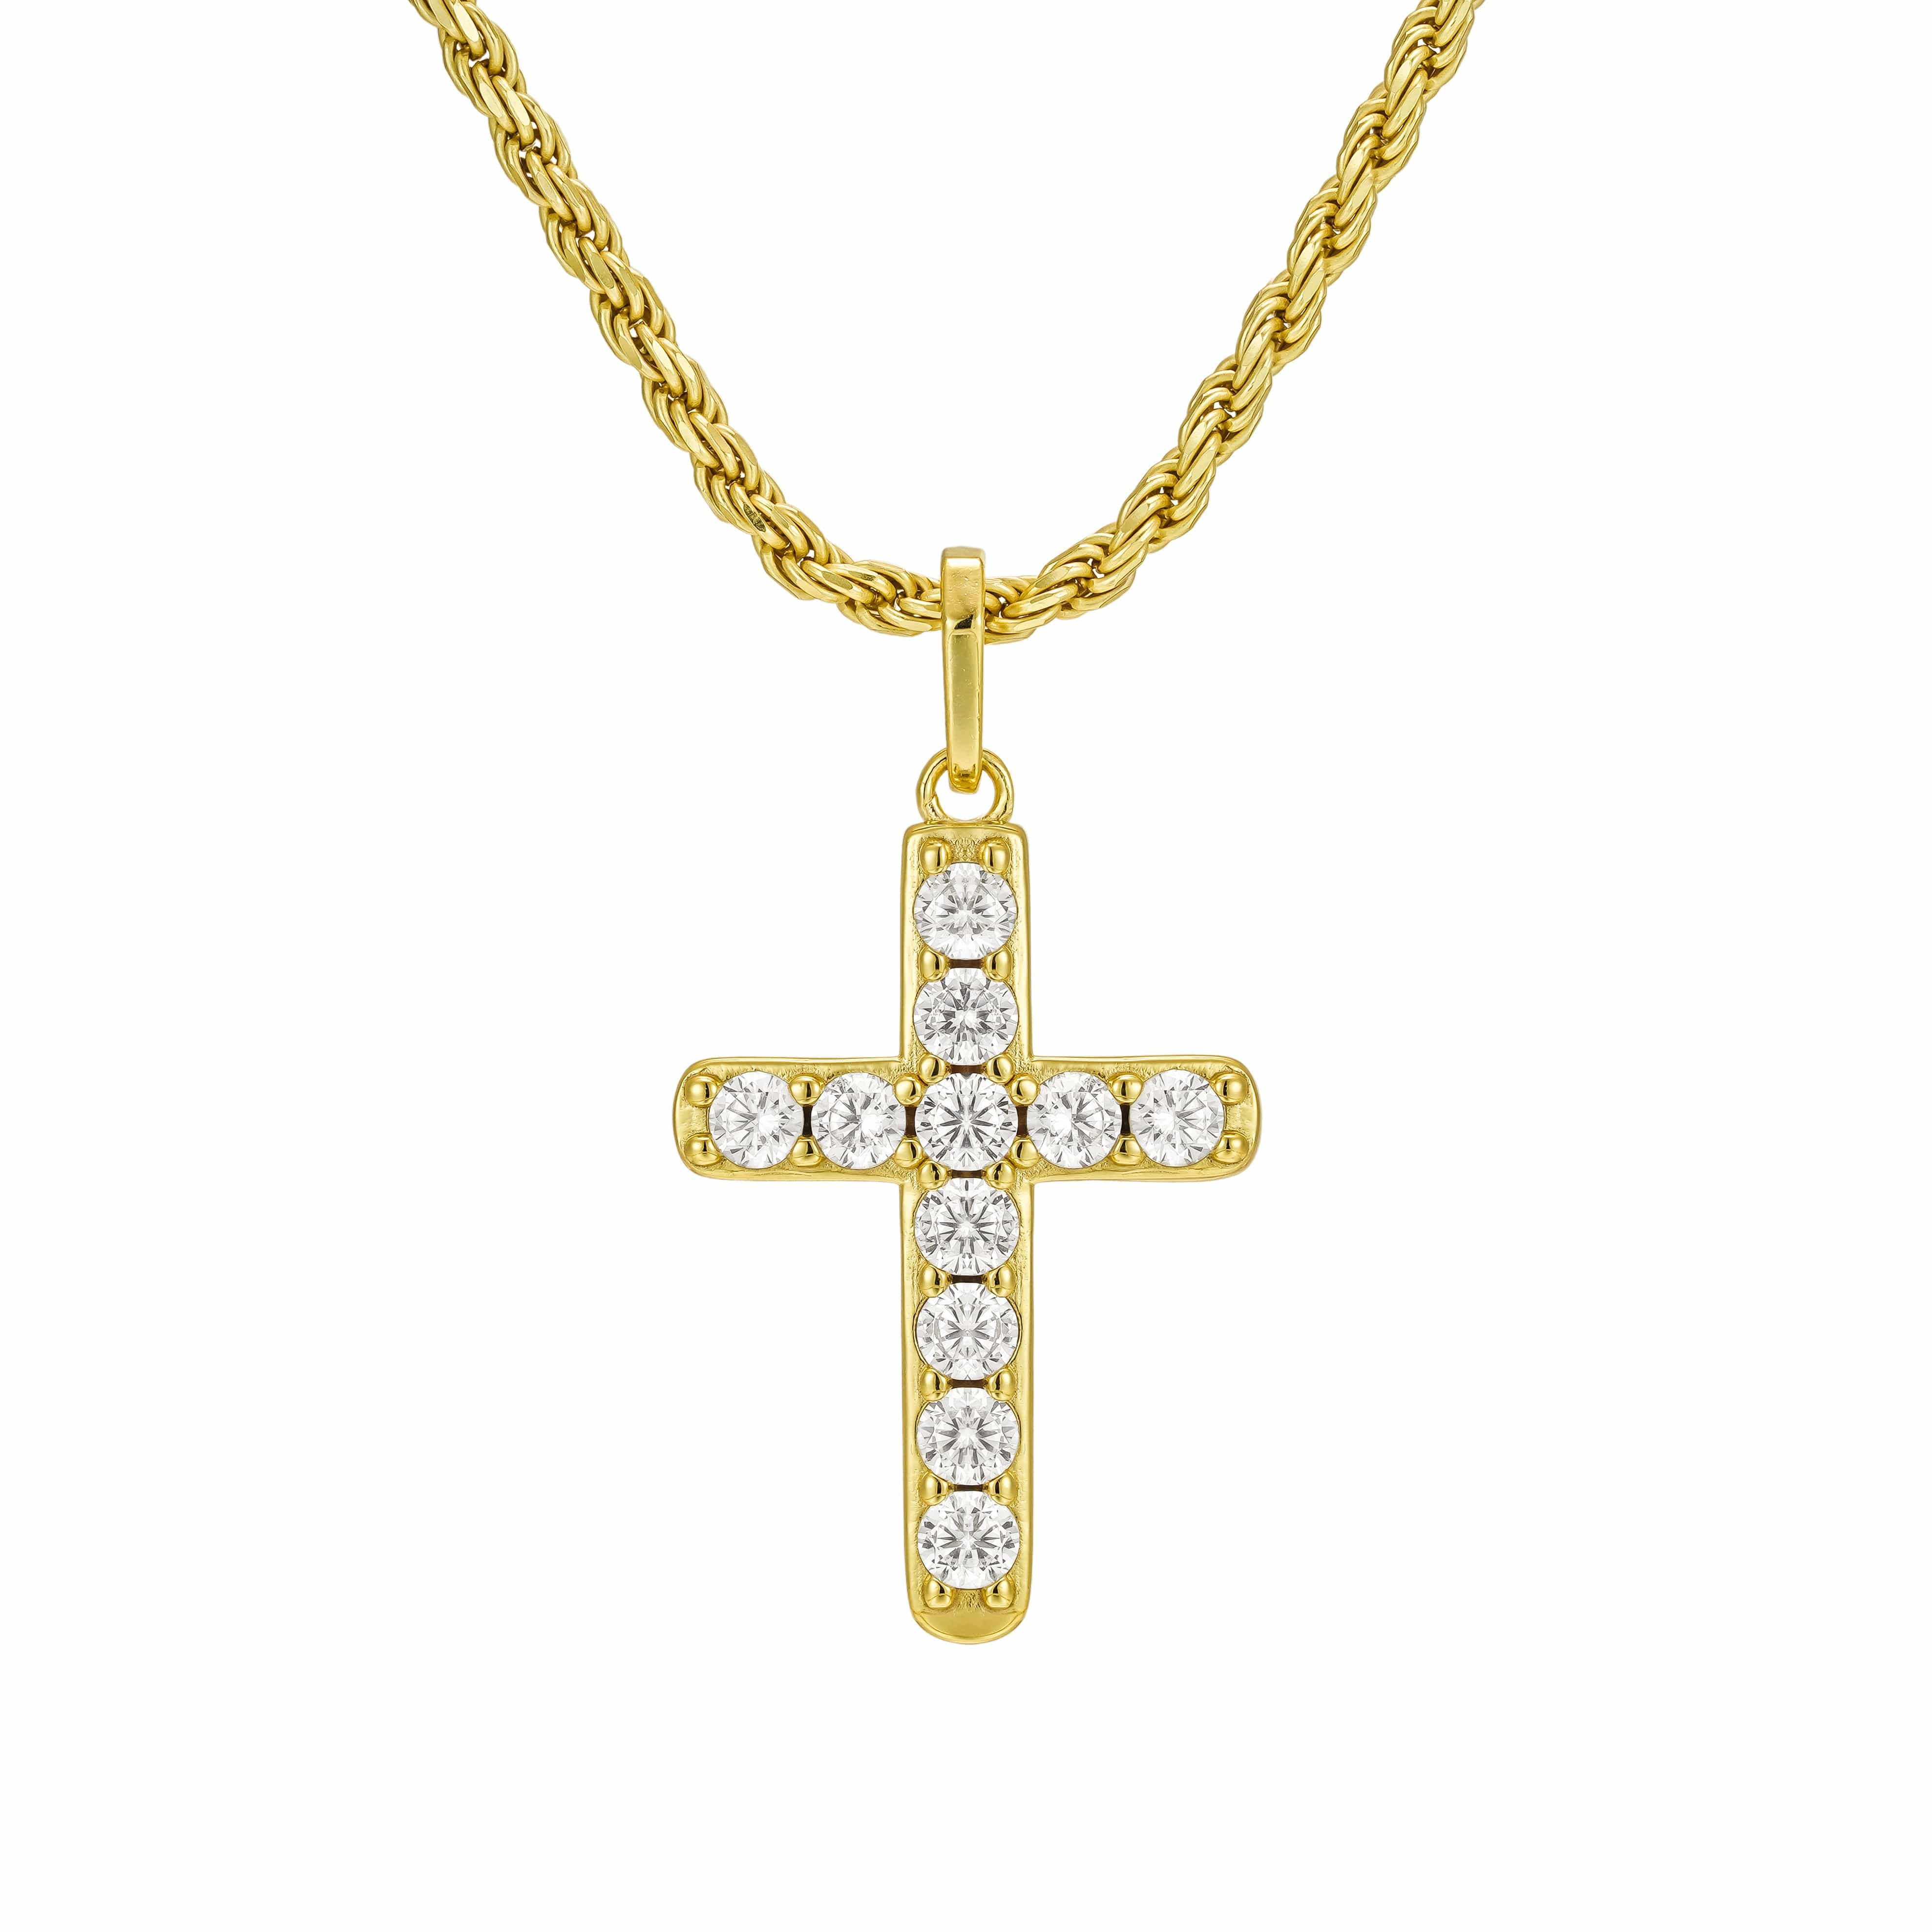 All Wear Jewellery Micro Studded Cross Pendant - Gold